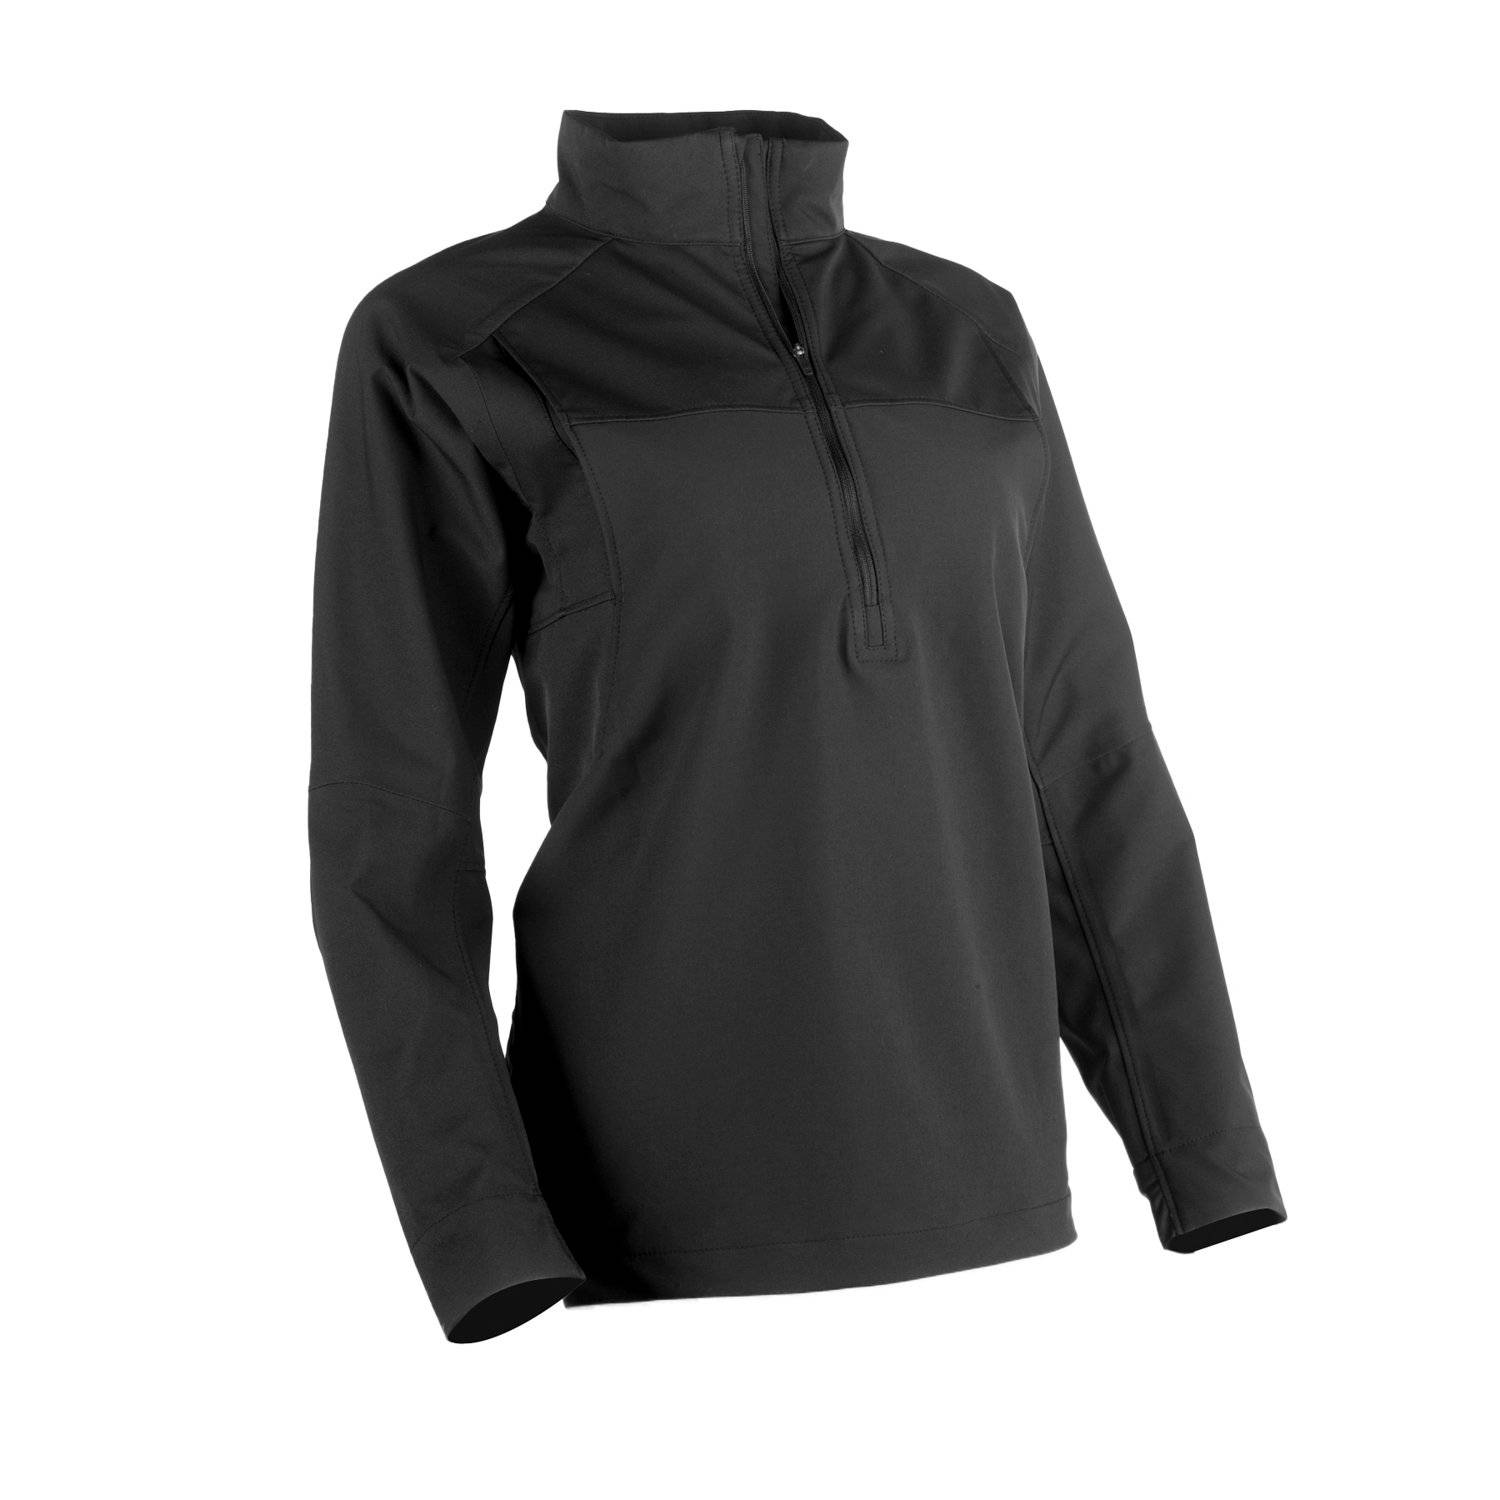 Under Armour Women's Infrared Tactical ColdGear Fleece 1/4 Zip Pullover